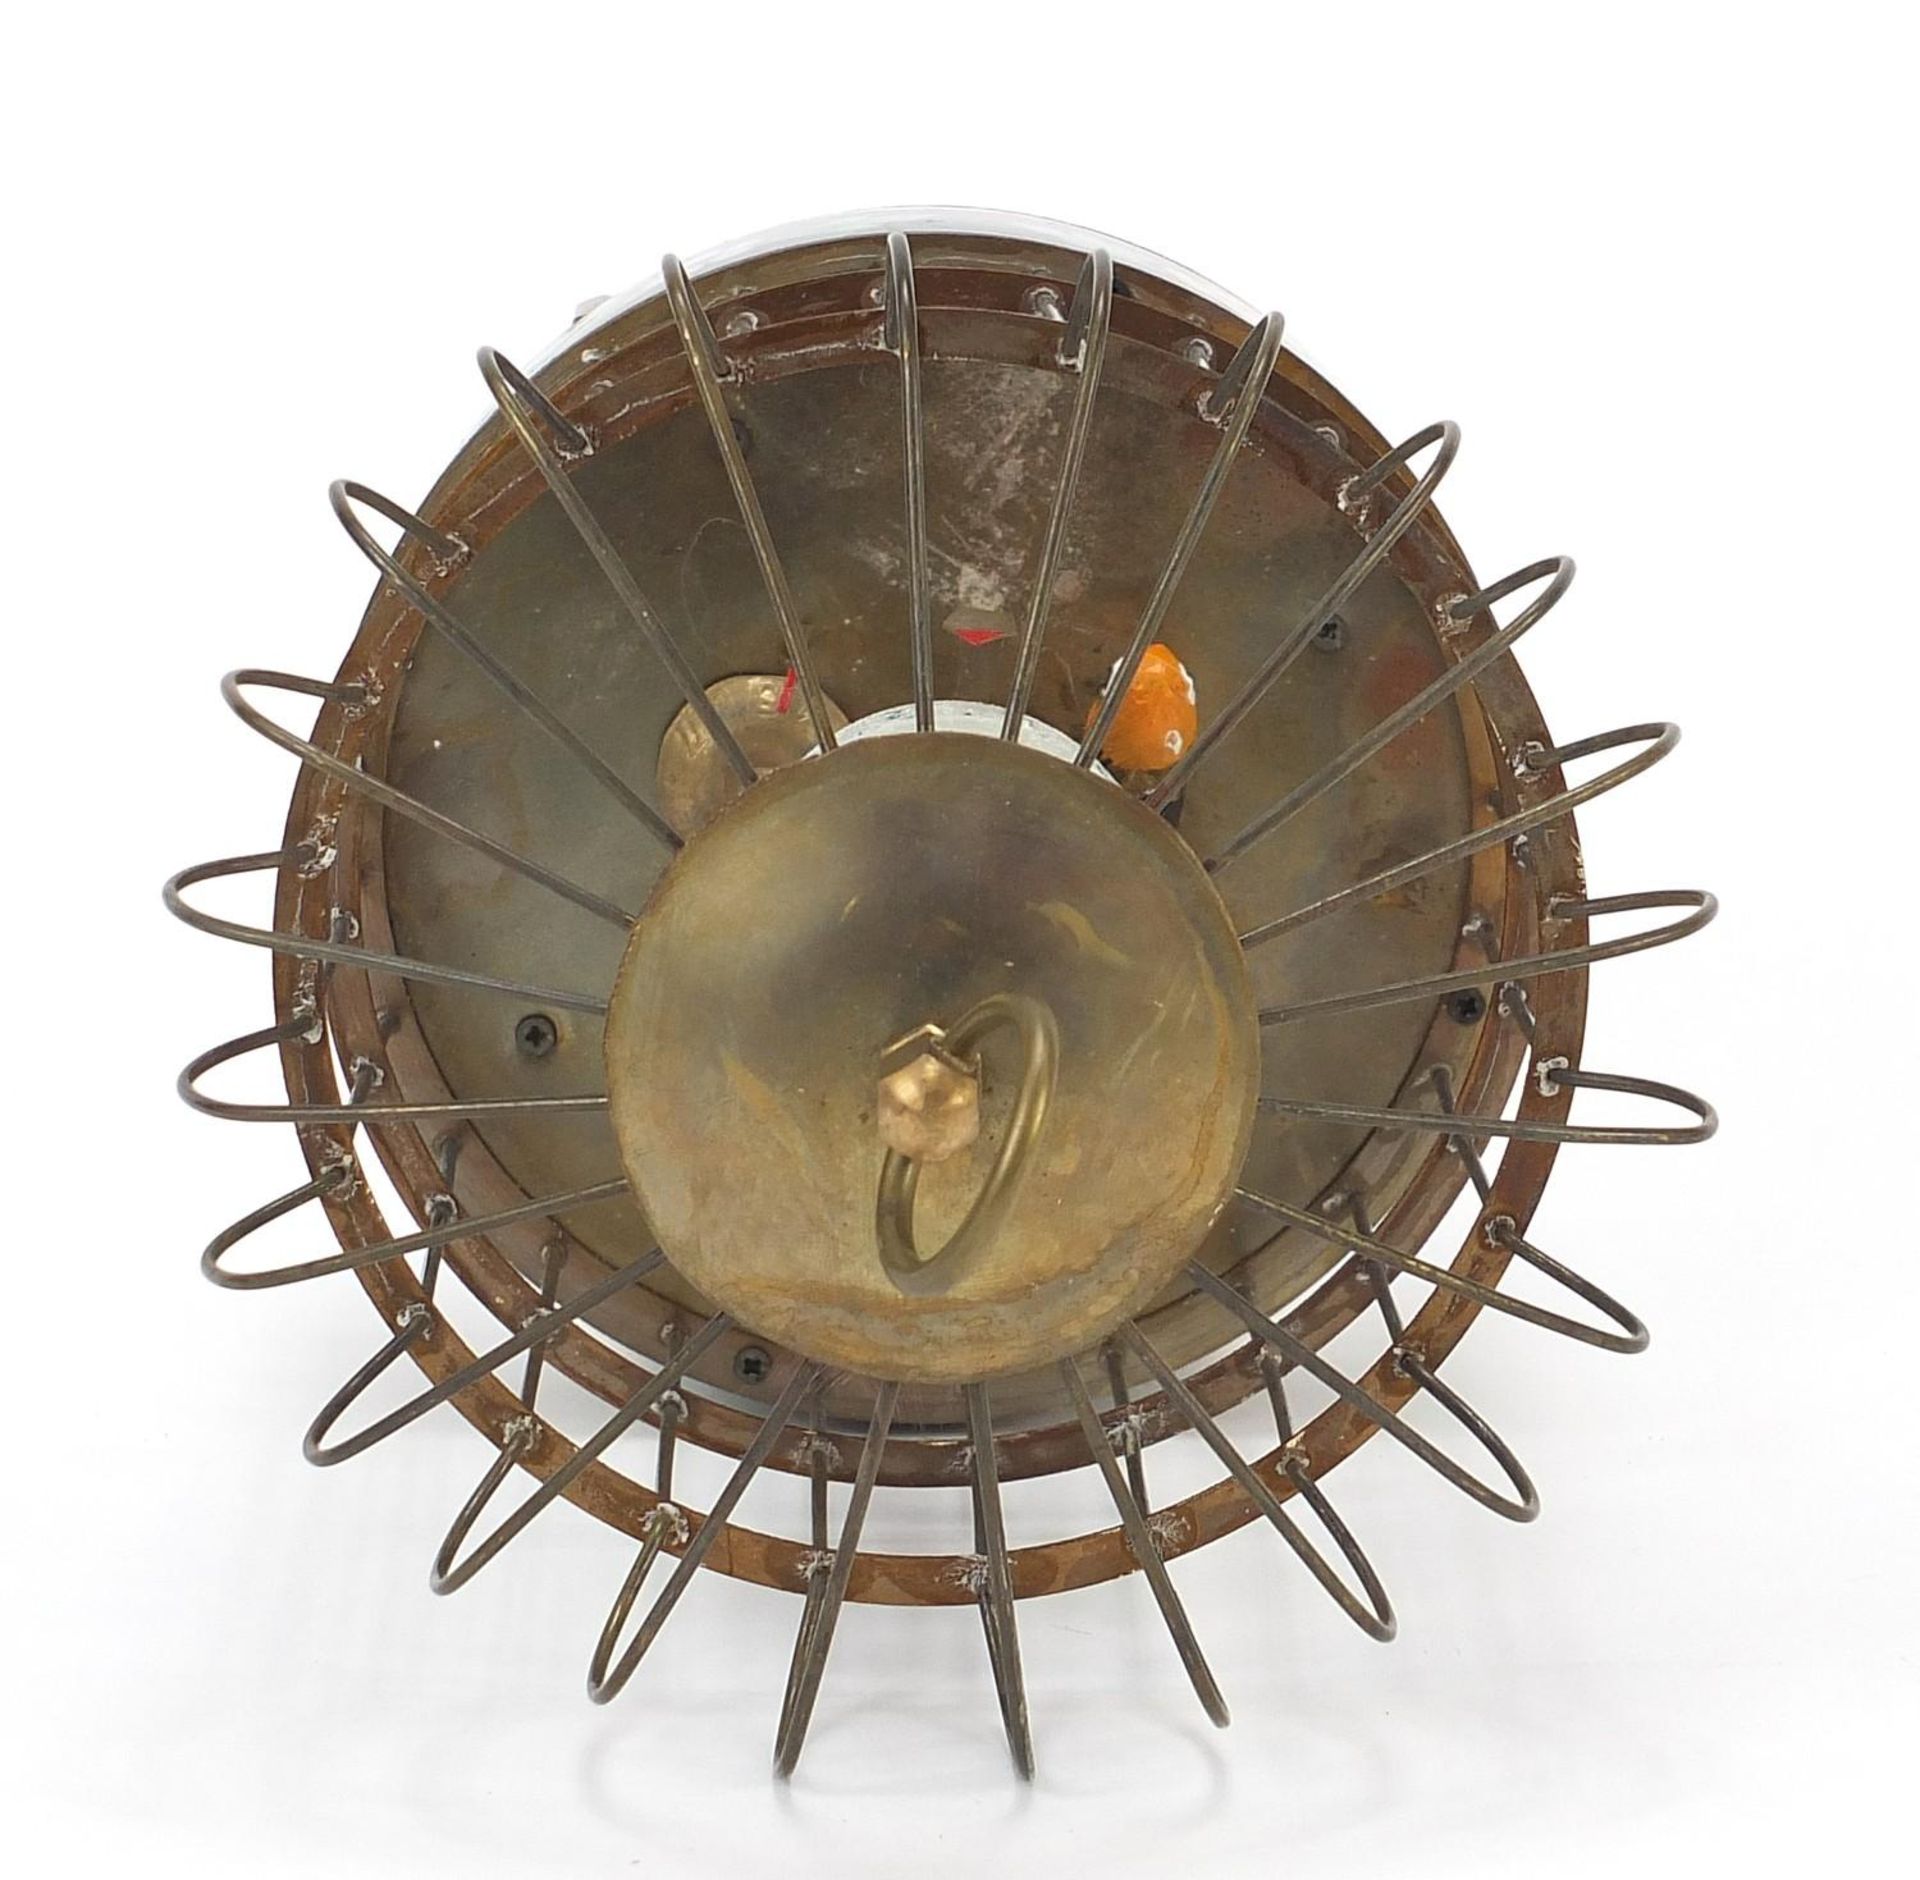 Brass clockwork automaton bird cage alarm clock with cloisonné band, 19.5cm high - Image 3 of 4